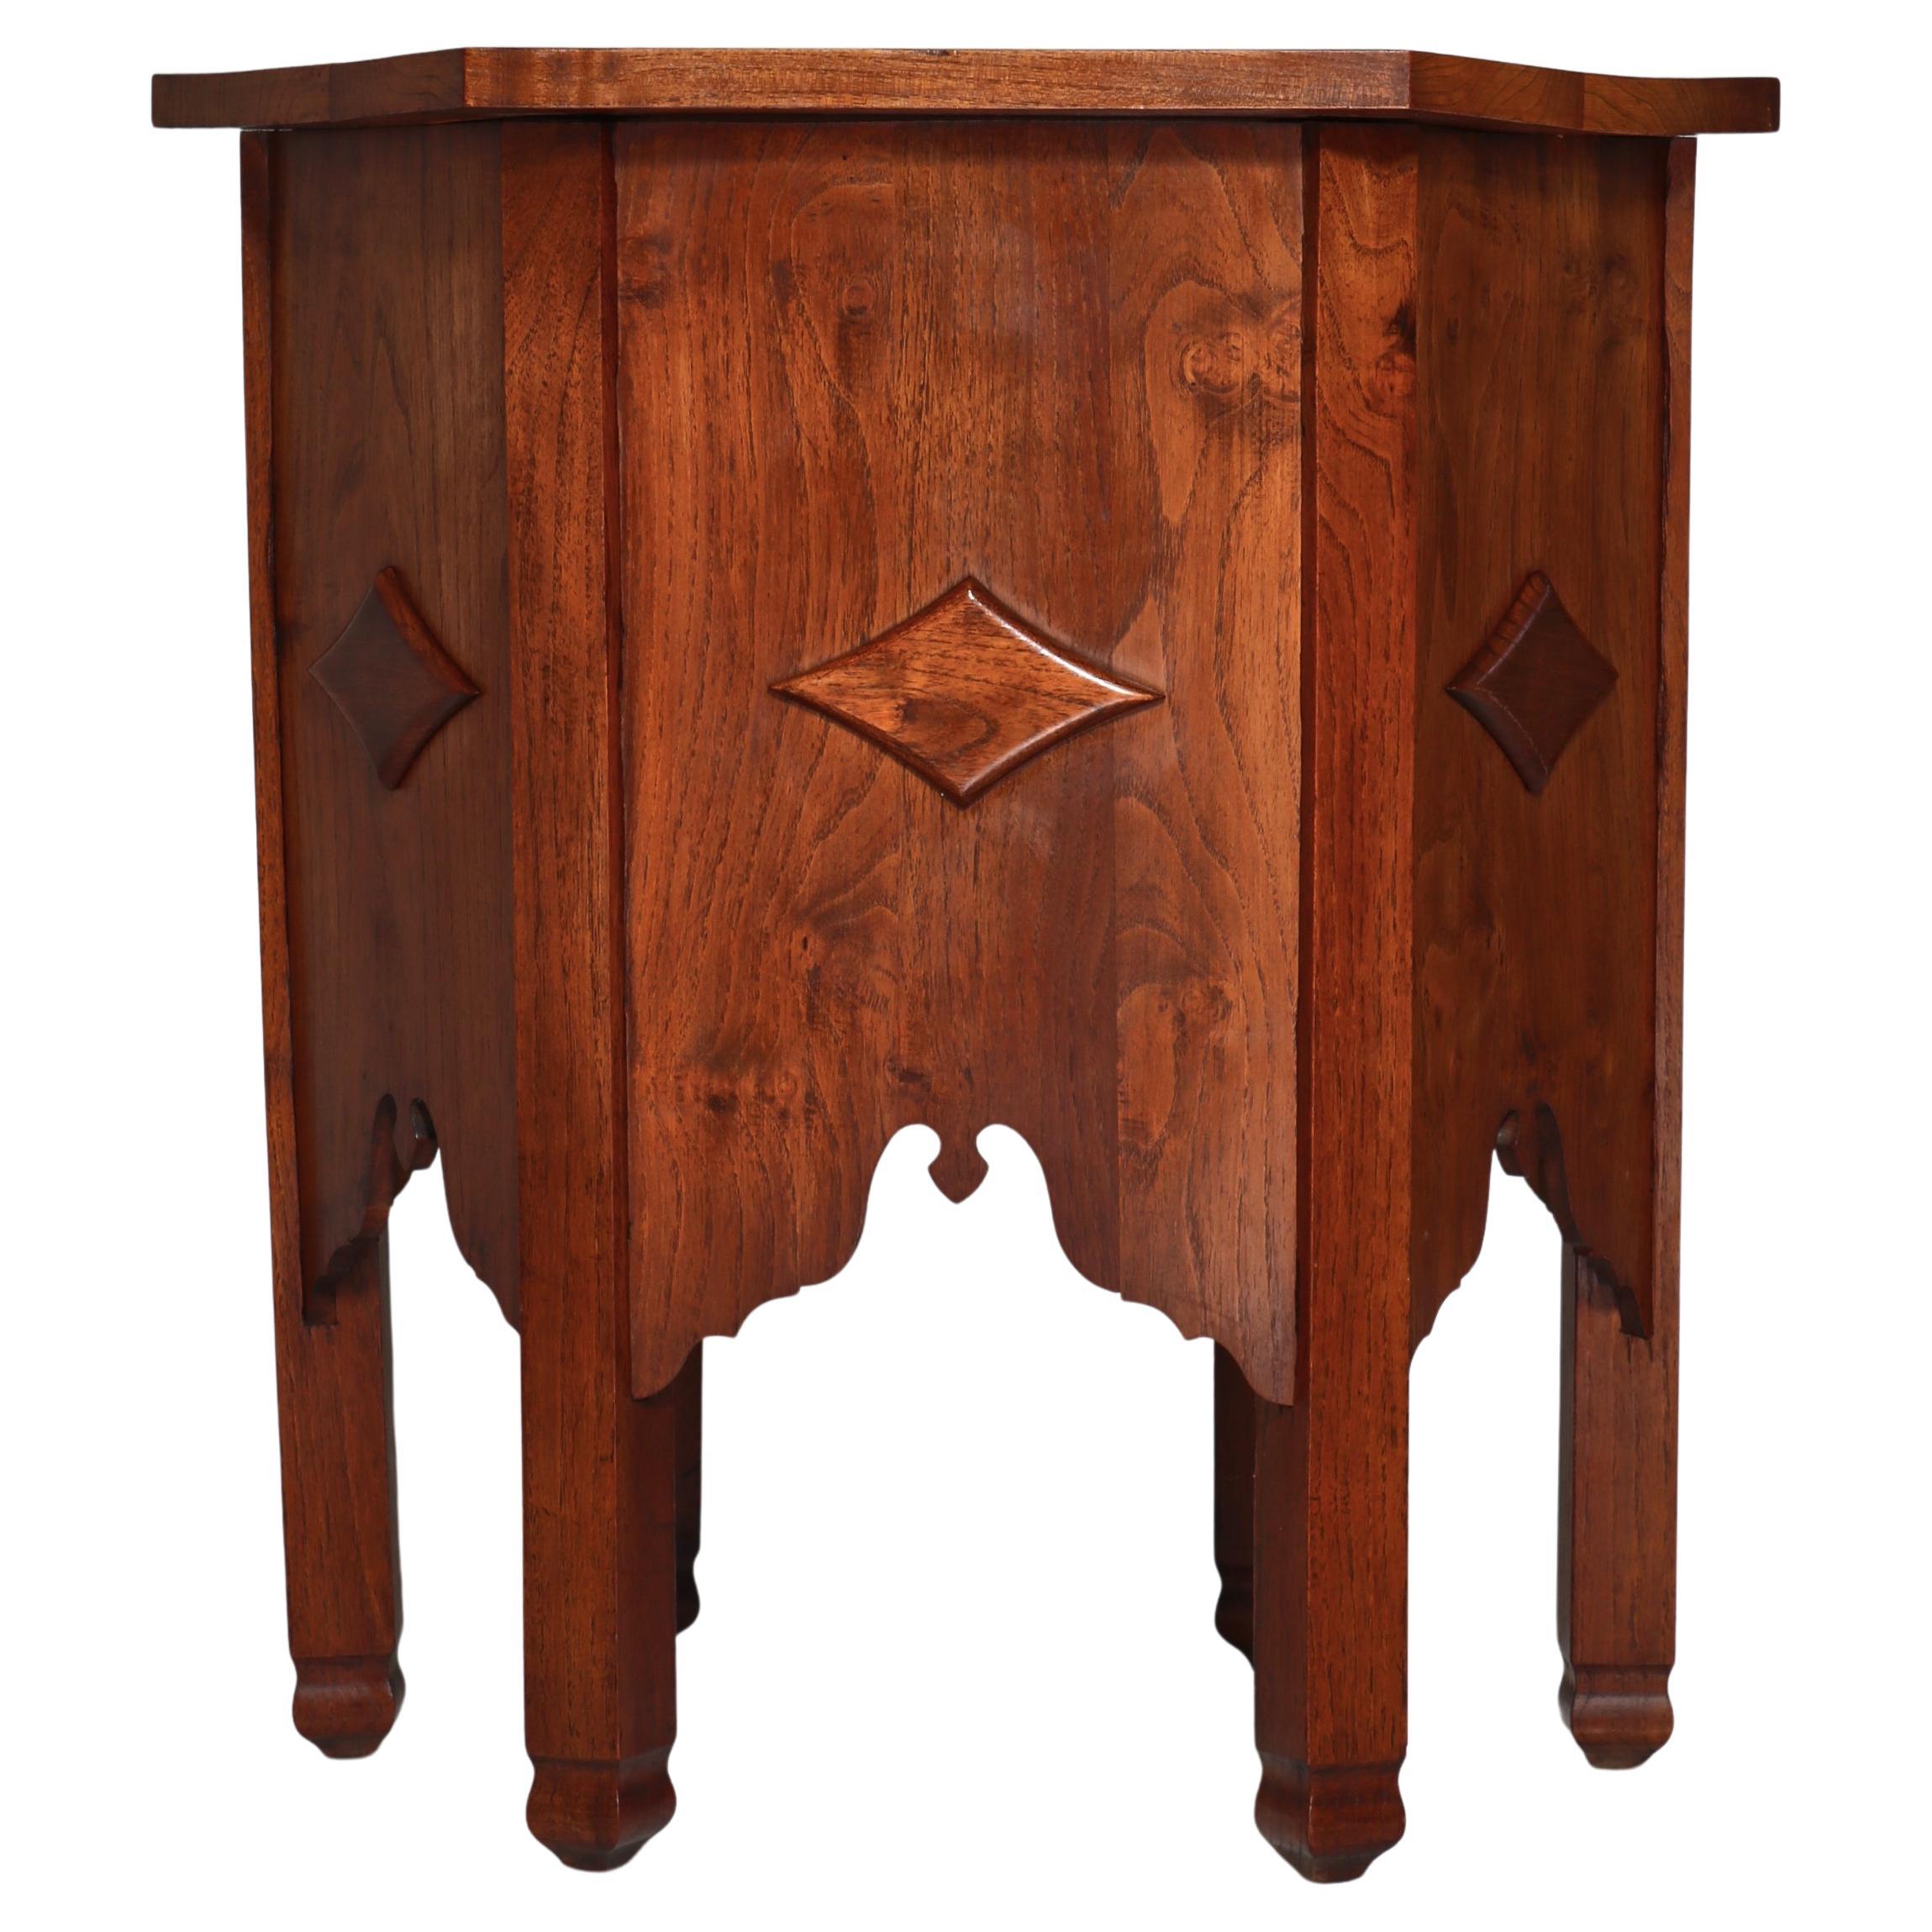 Art Nouveau Hexagonal Side Table by Danish Cabinetmaker, Carved Elm Tree, 1930s